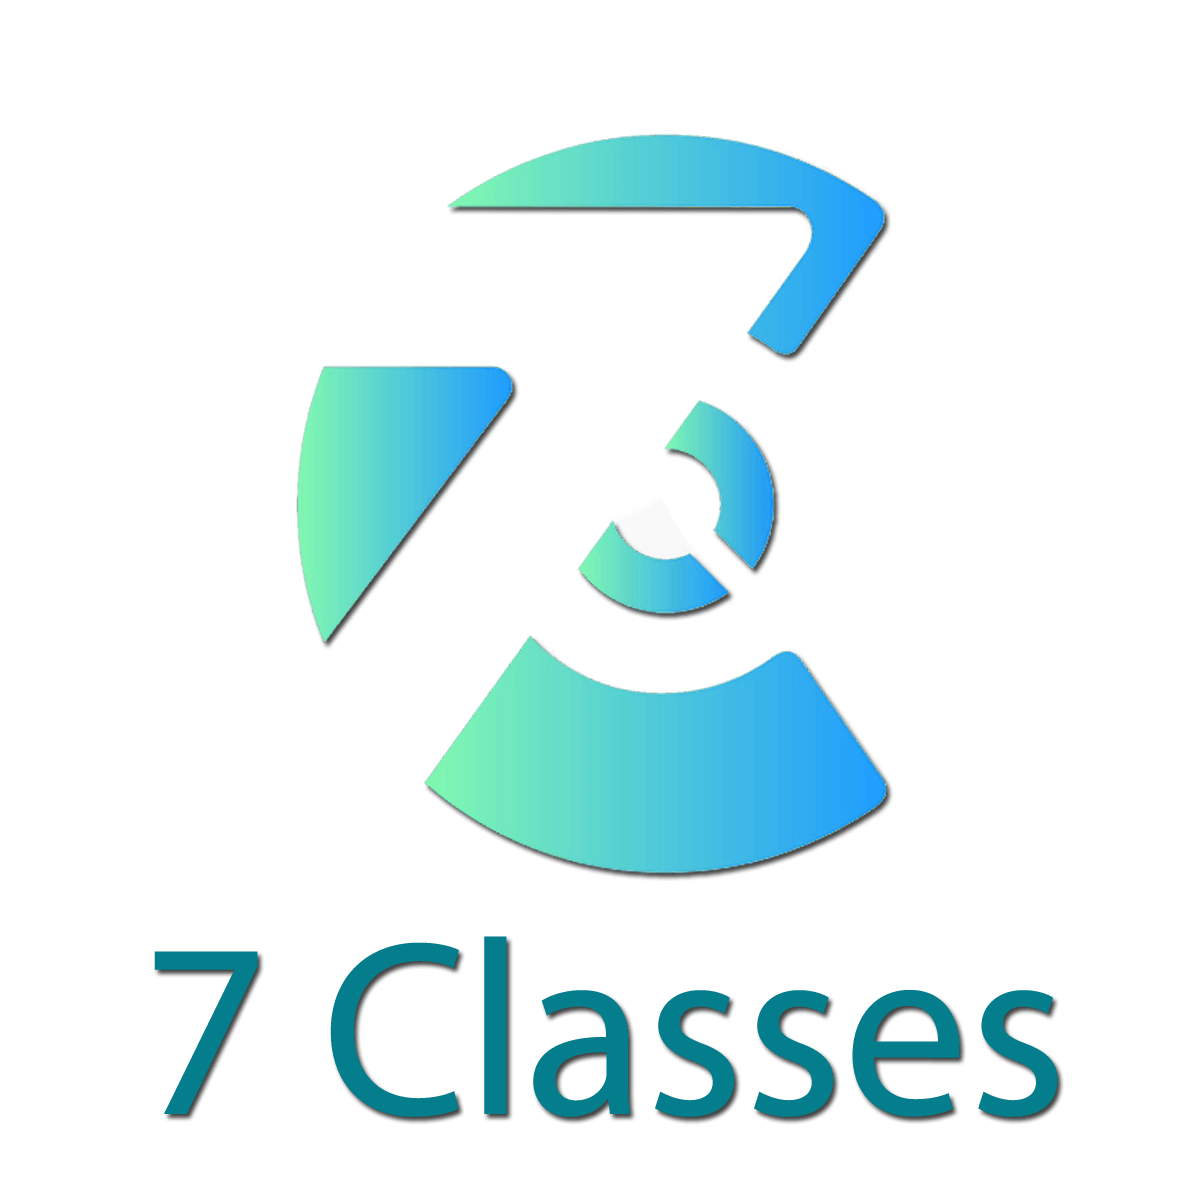 7th classes logo